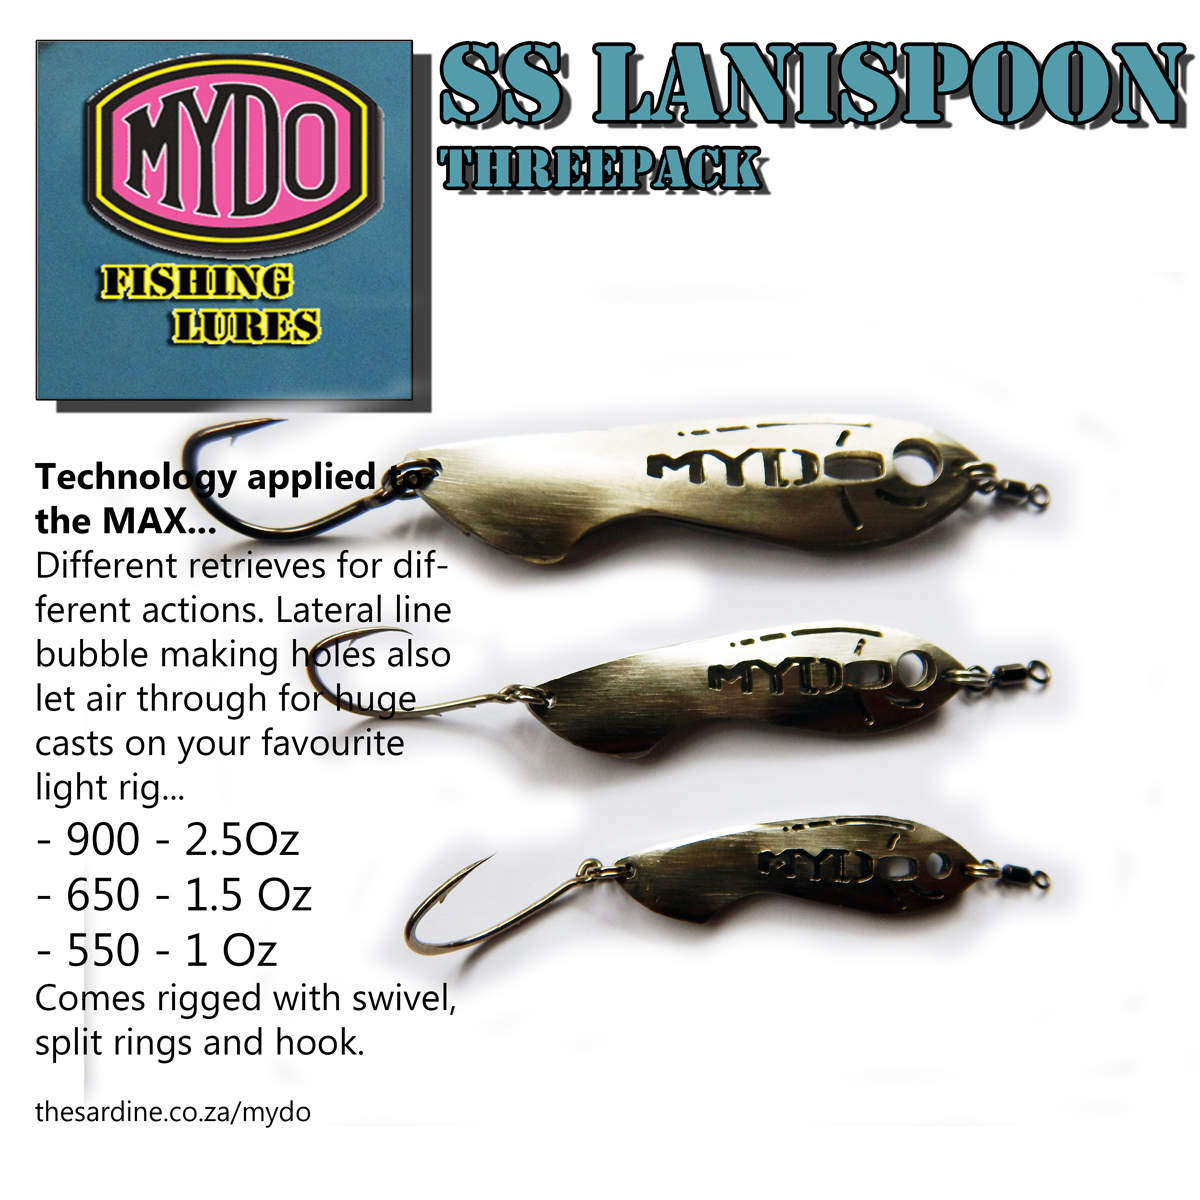 MYDO SS Lanispoon Three Pack 550. 650 and 900